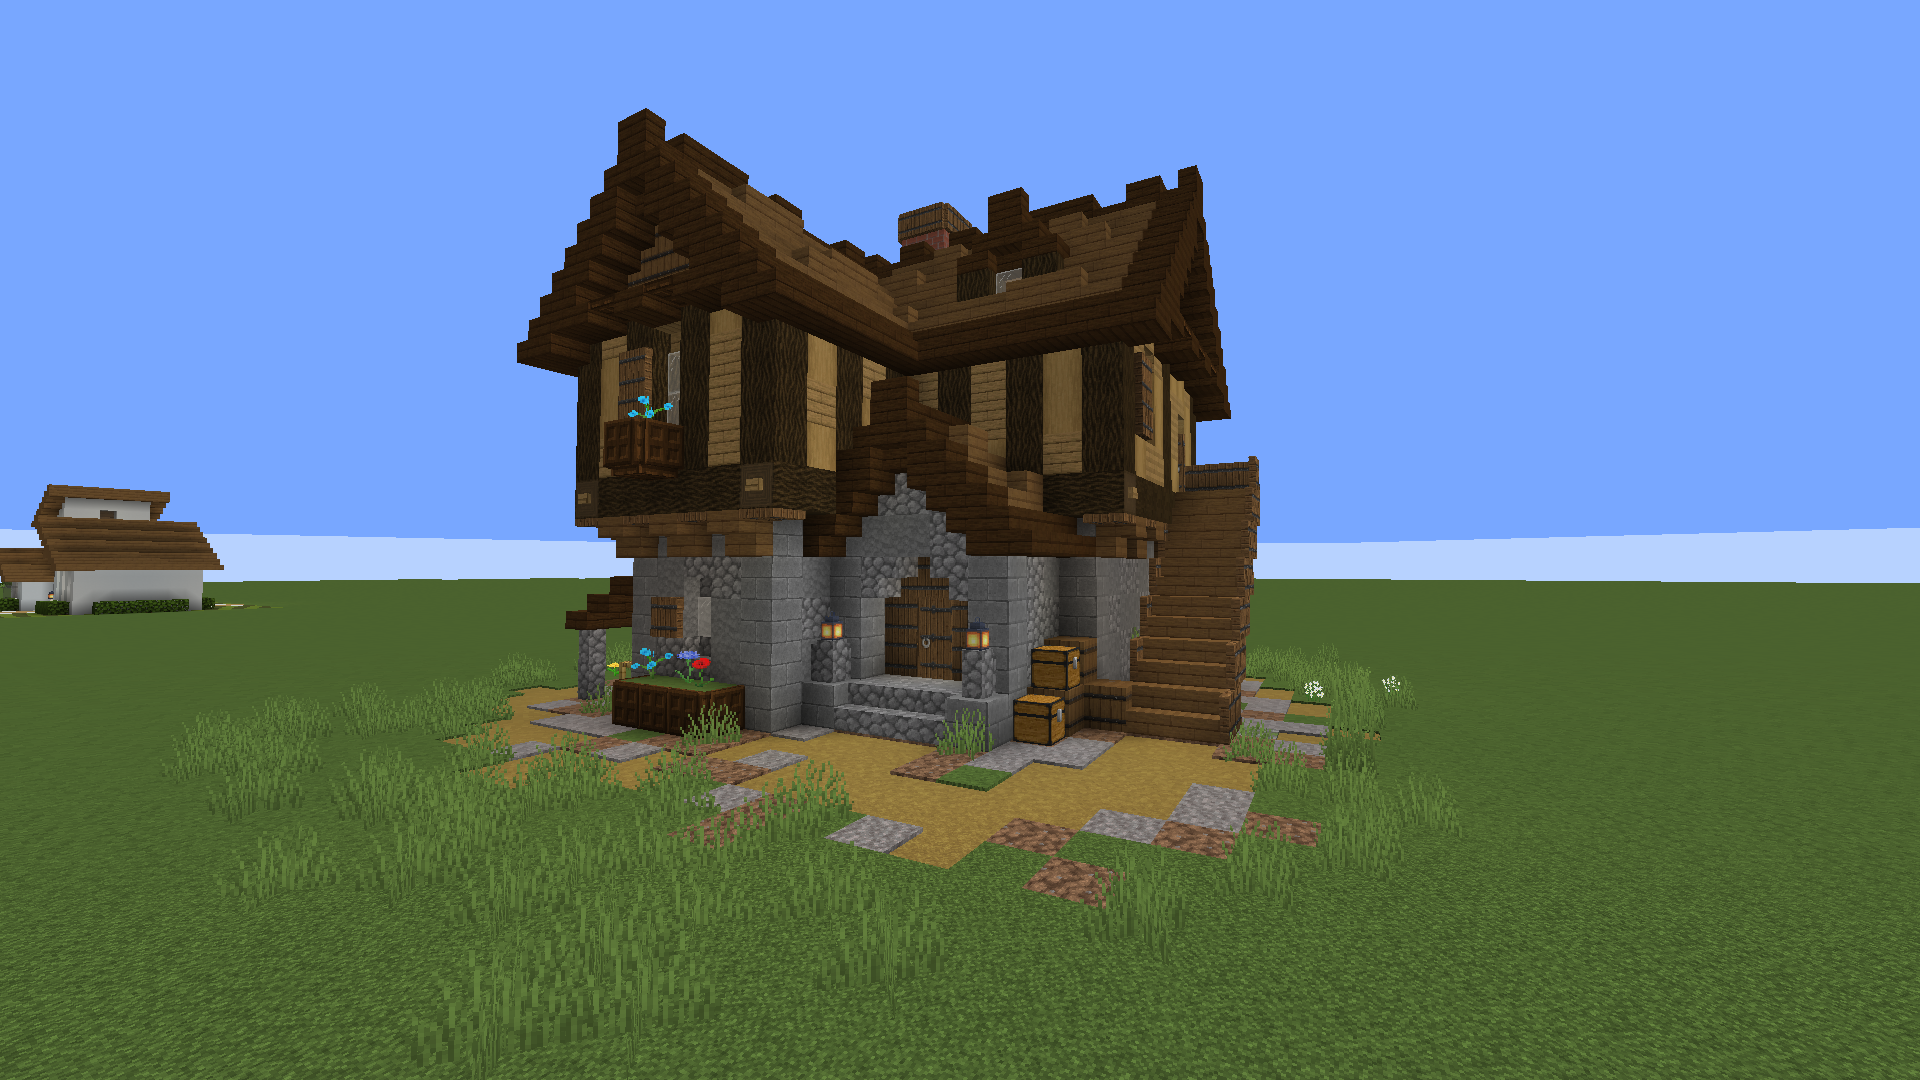 Minecract Village Like Starter Home with interior schematic (litematic)